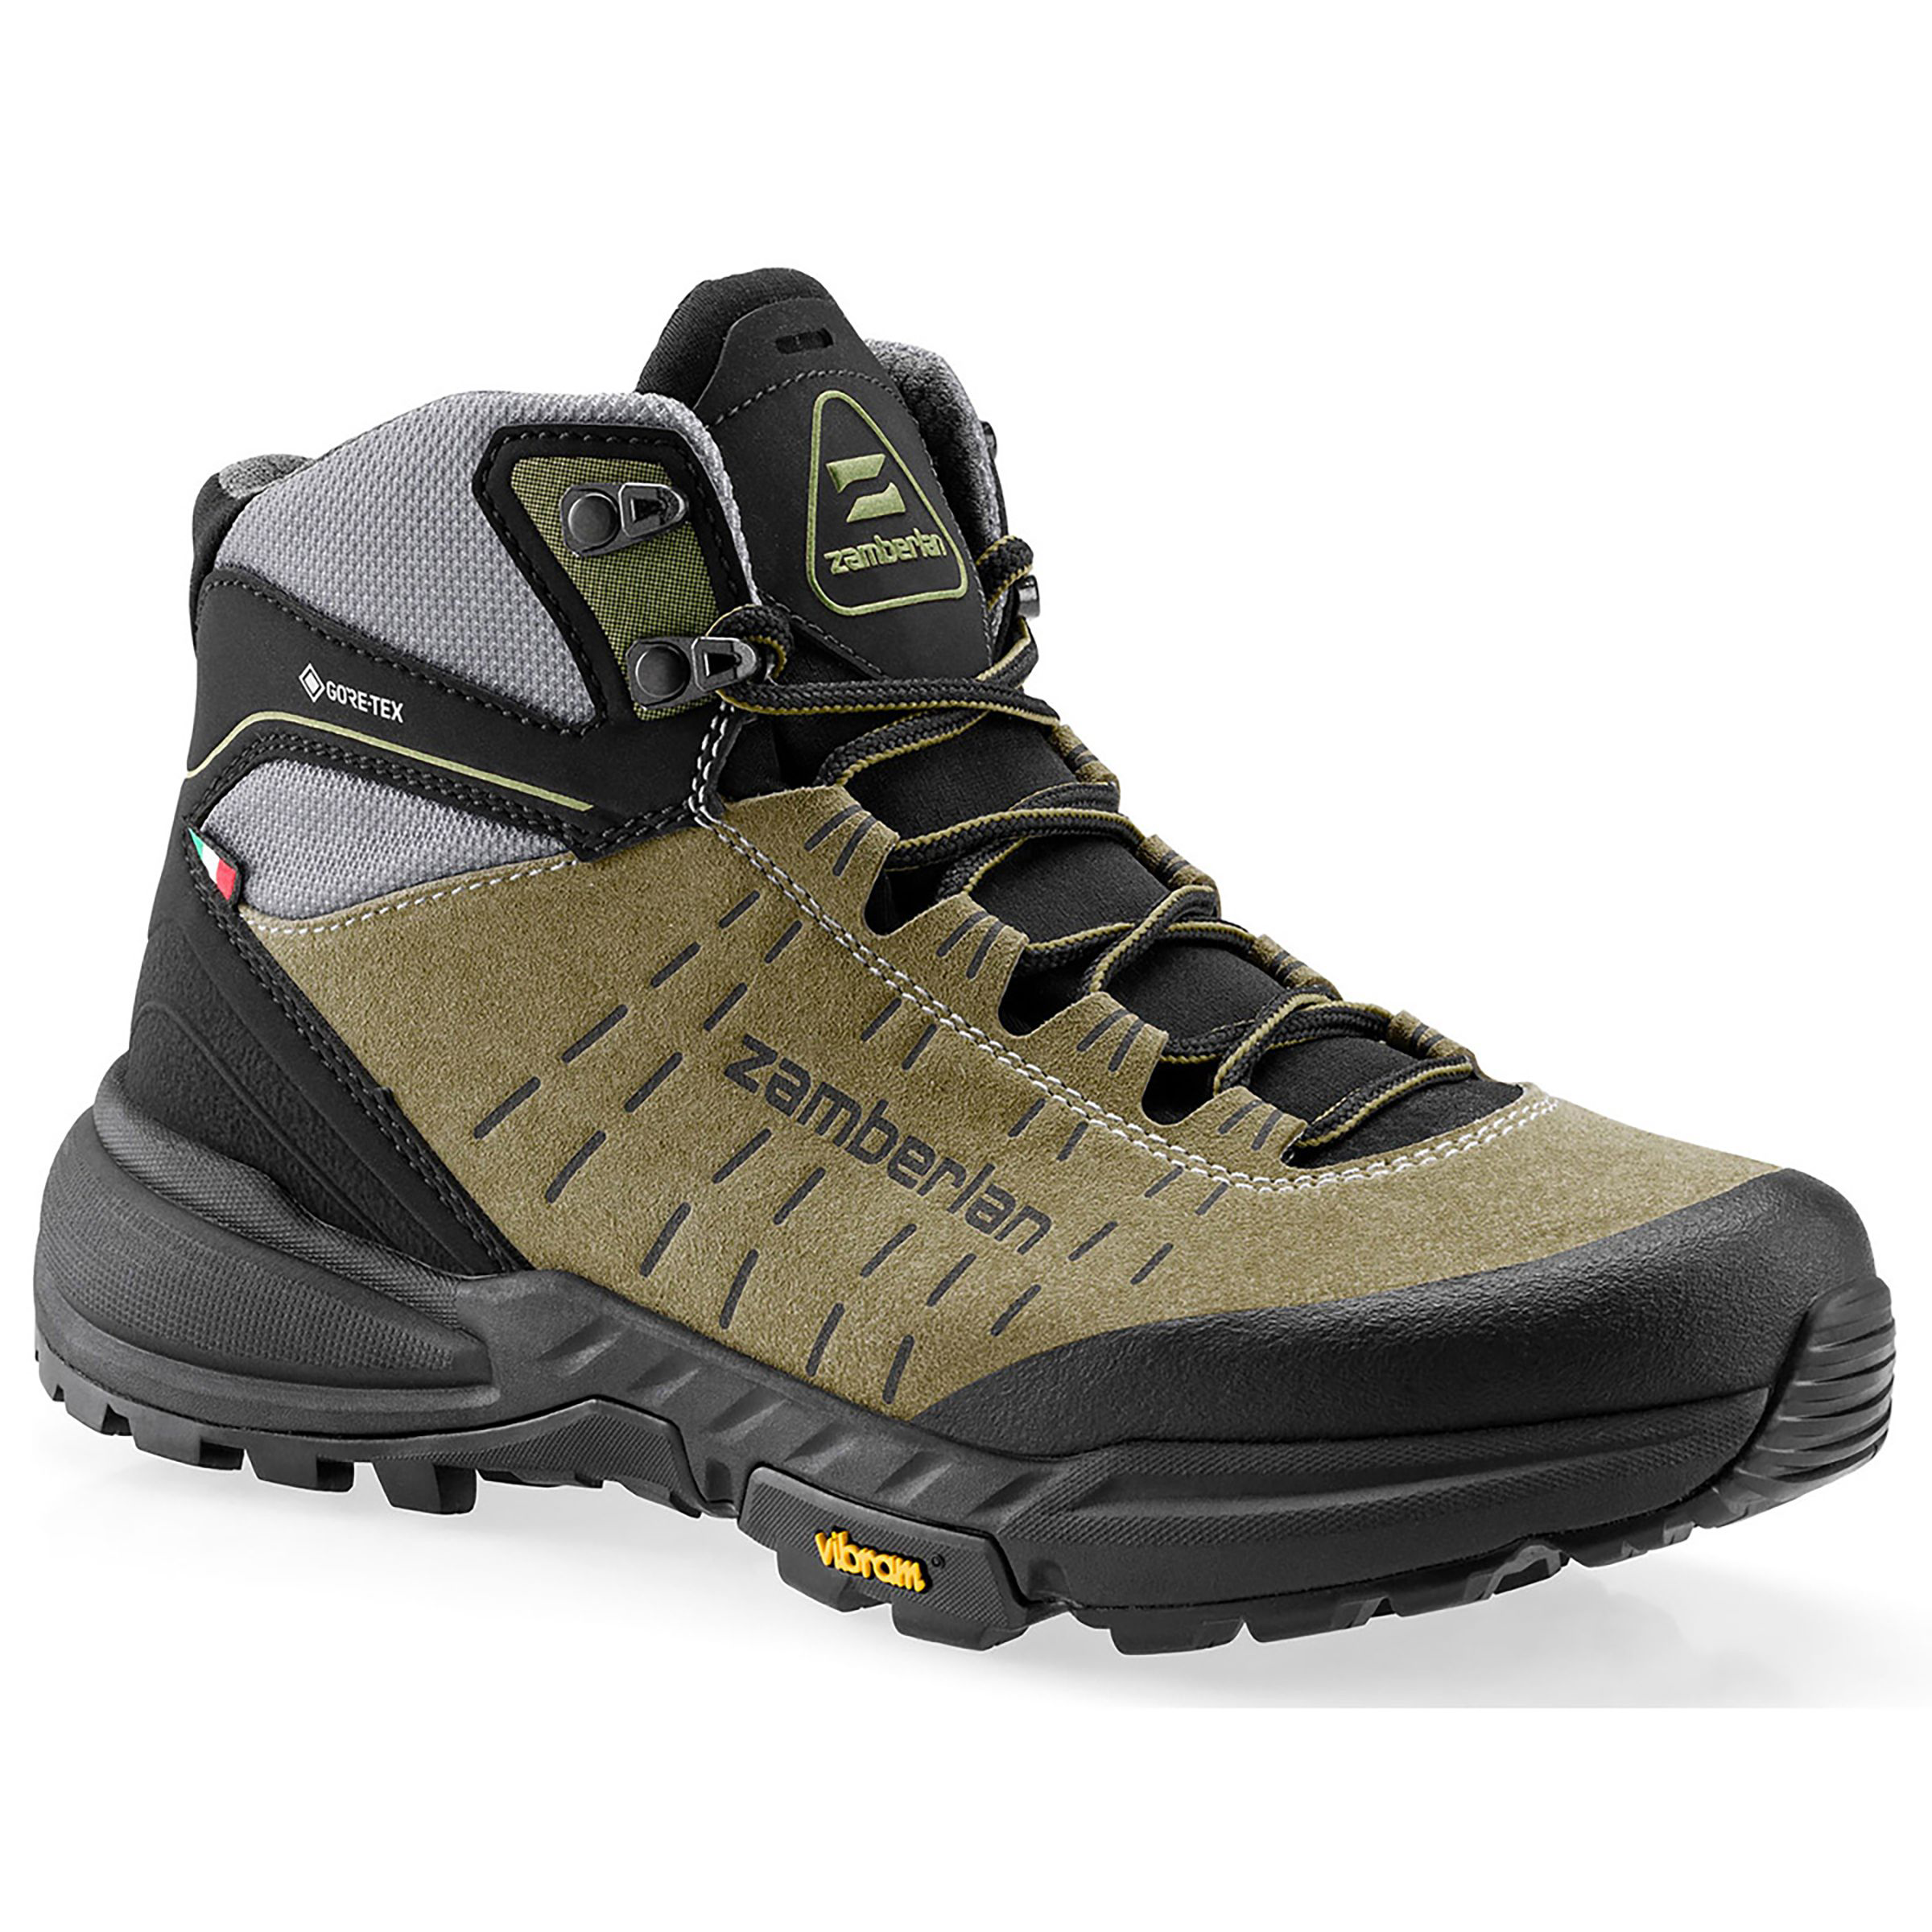 Zamberlan 334 Circe GTX Waterproof Hiking Boots for Ladies - Green - 6M